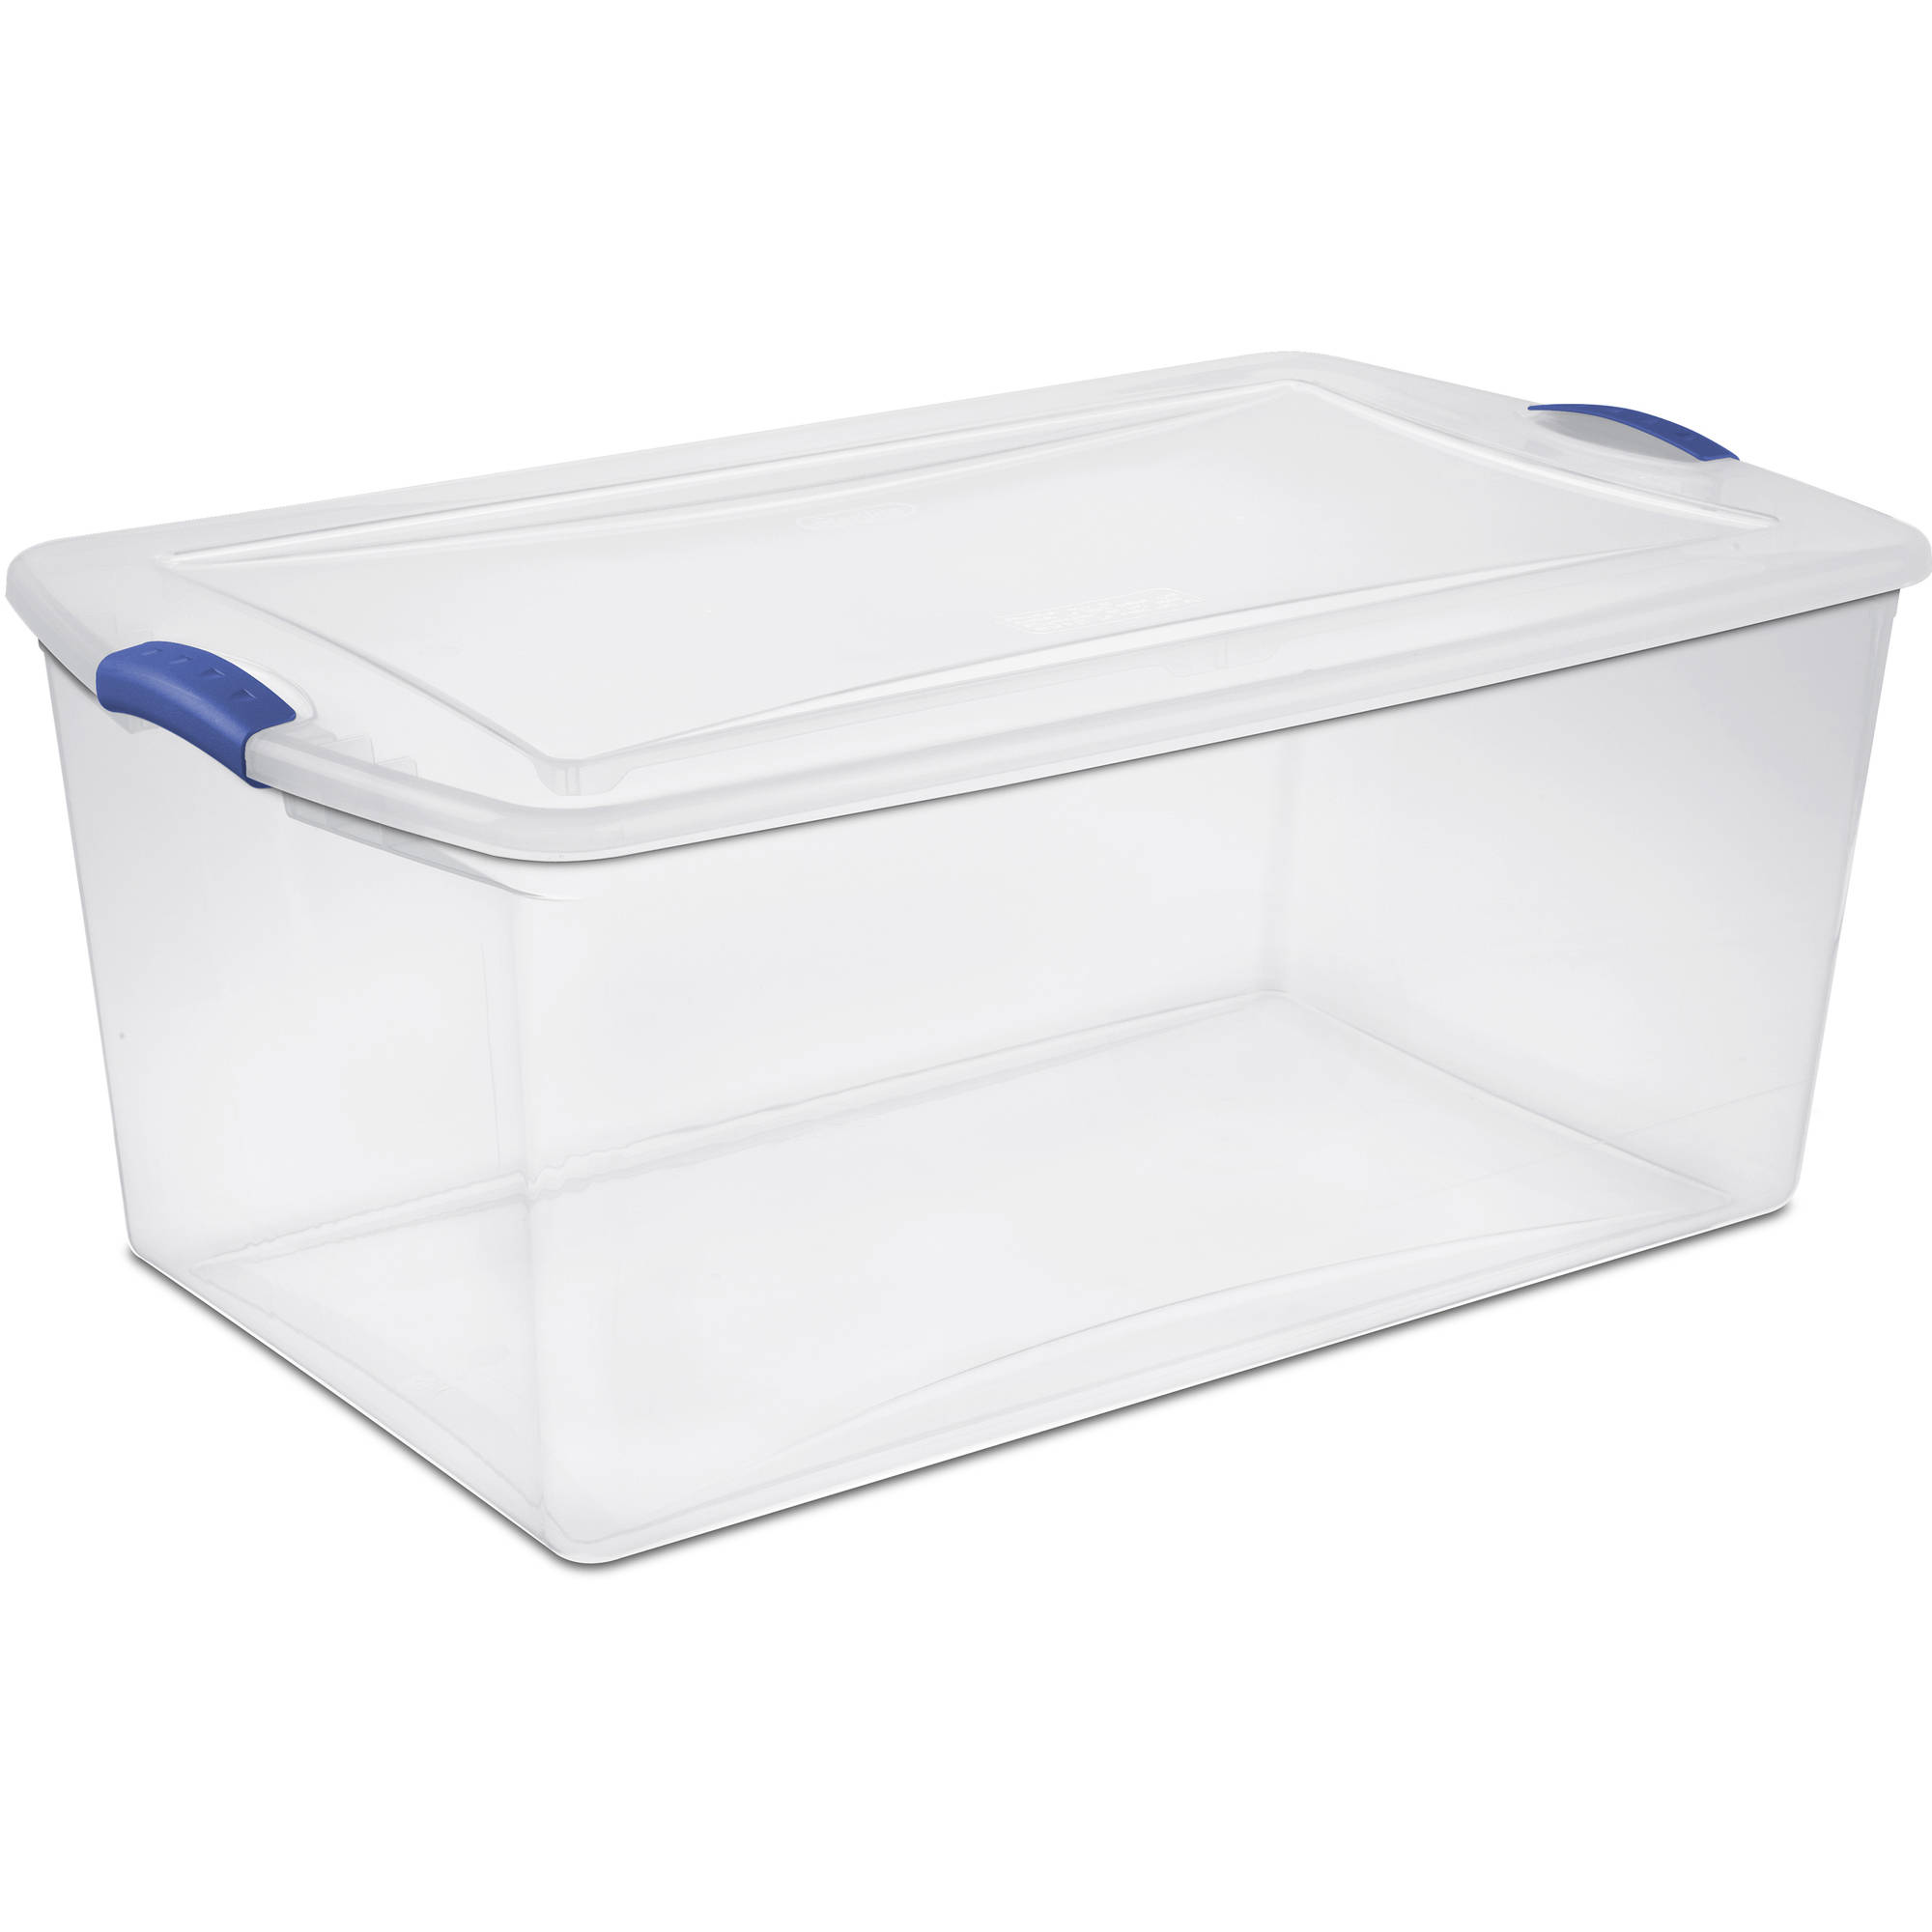 box clipart storage bin